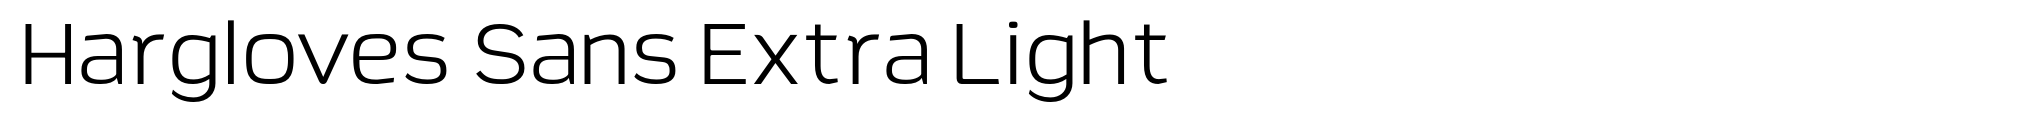 Hargloves Sans Extra Light image